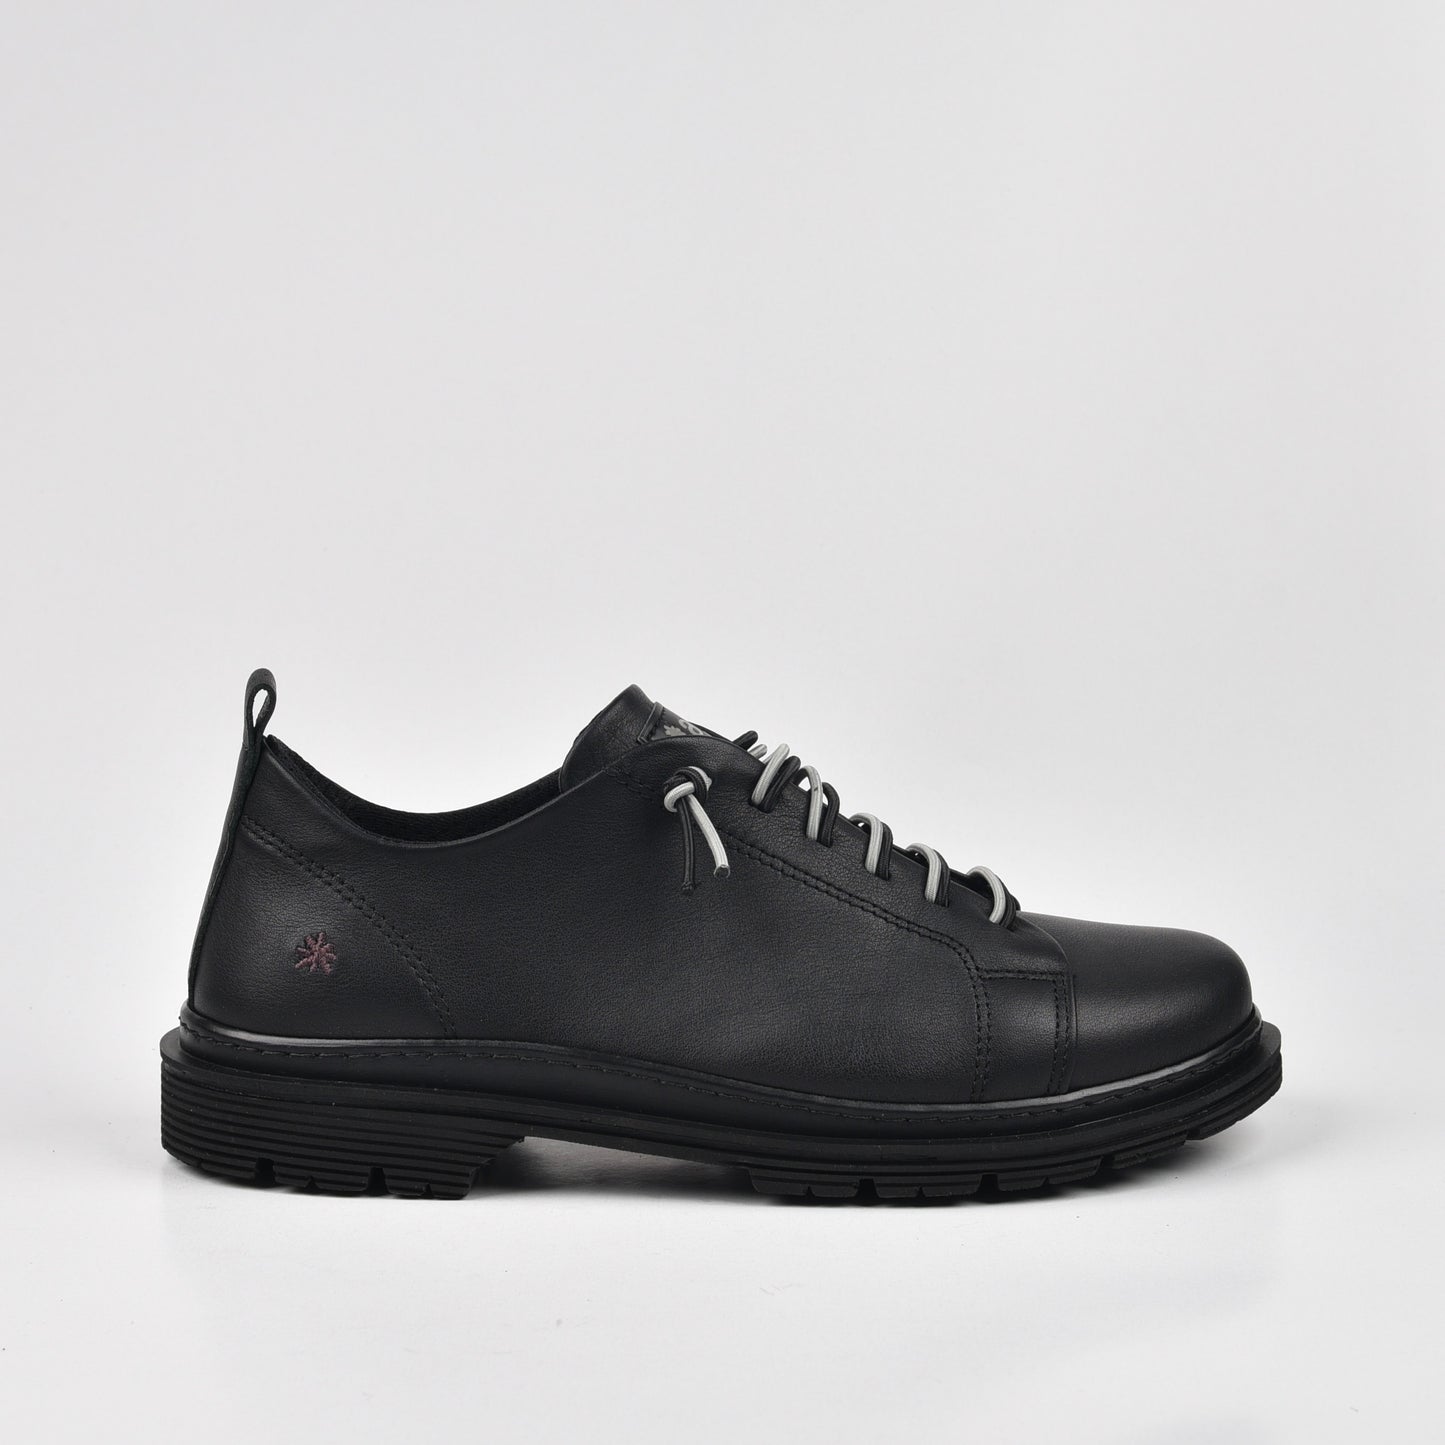 Art Spanish Loafers for Men in Napa Black.